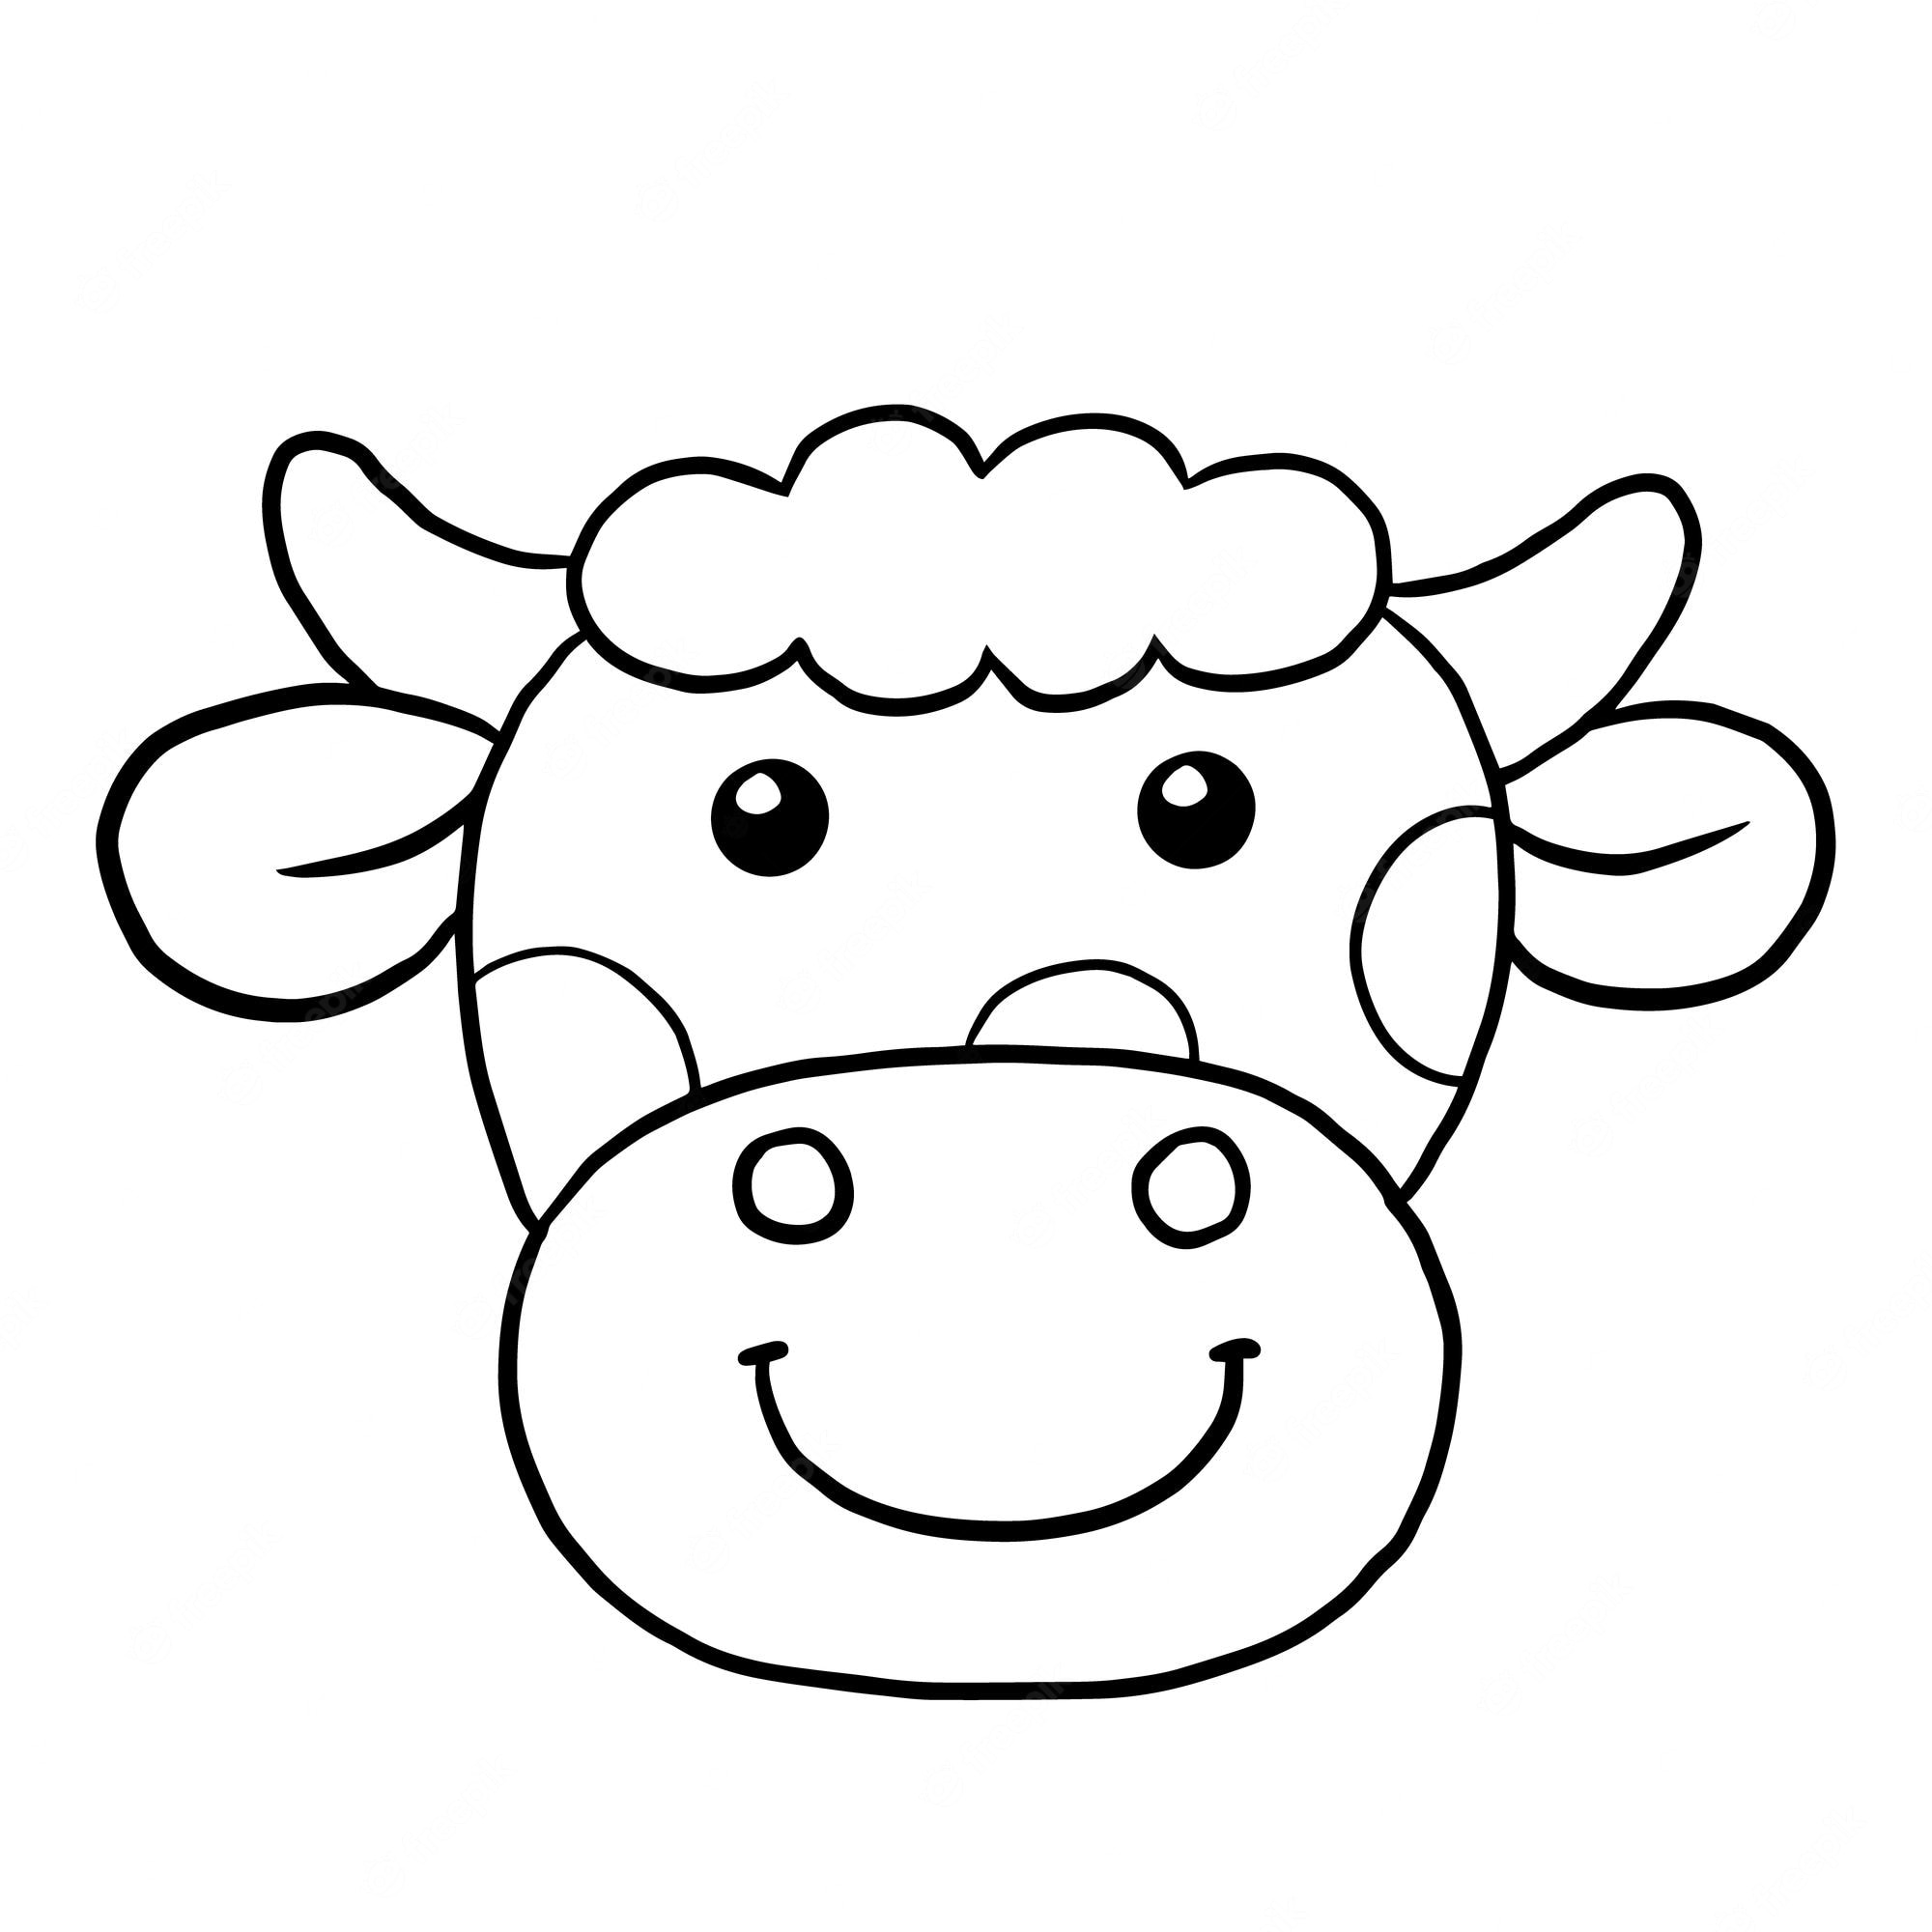 Premium Vector | Cow cartoon animal cute kawaii doodle coloring page drawing